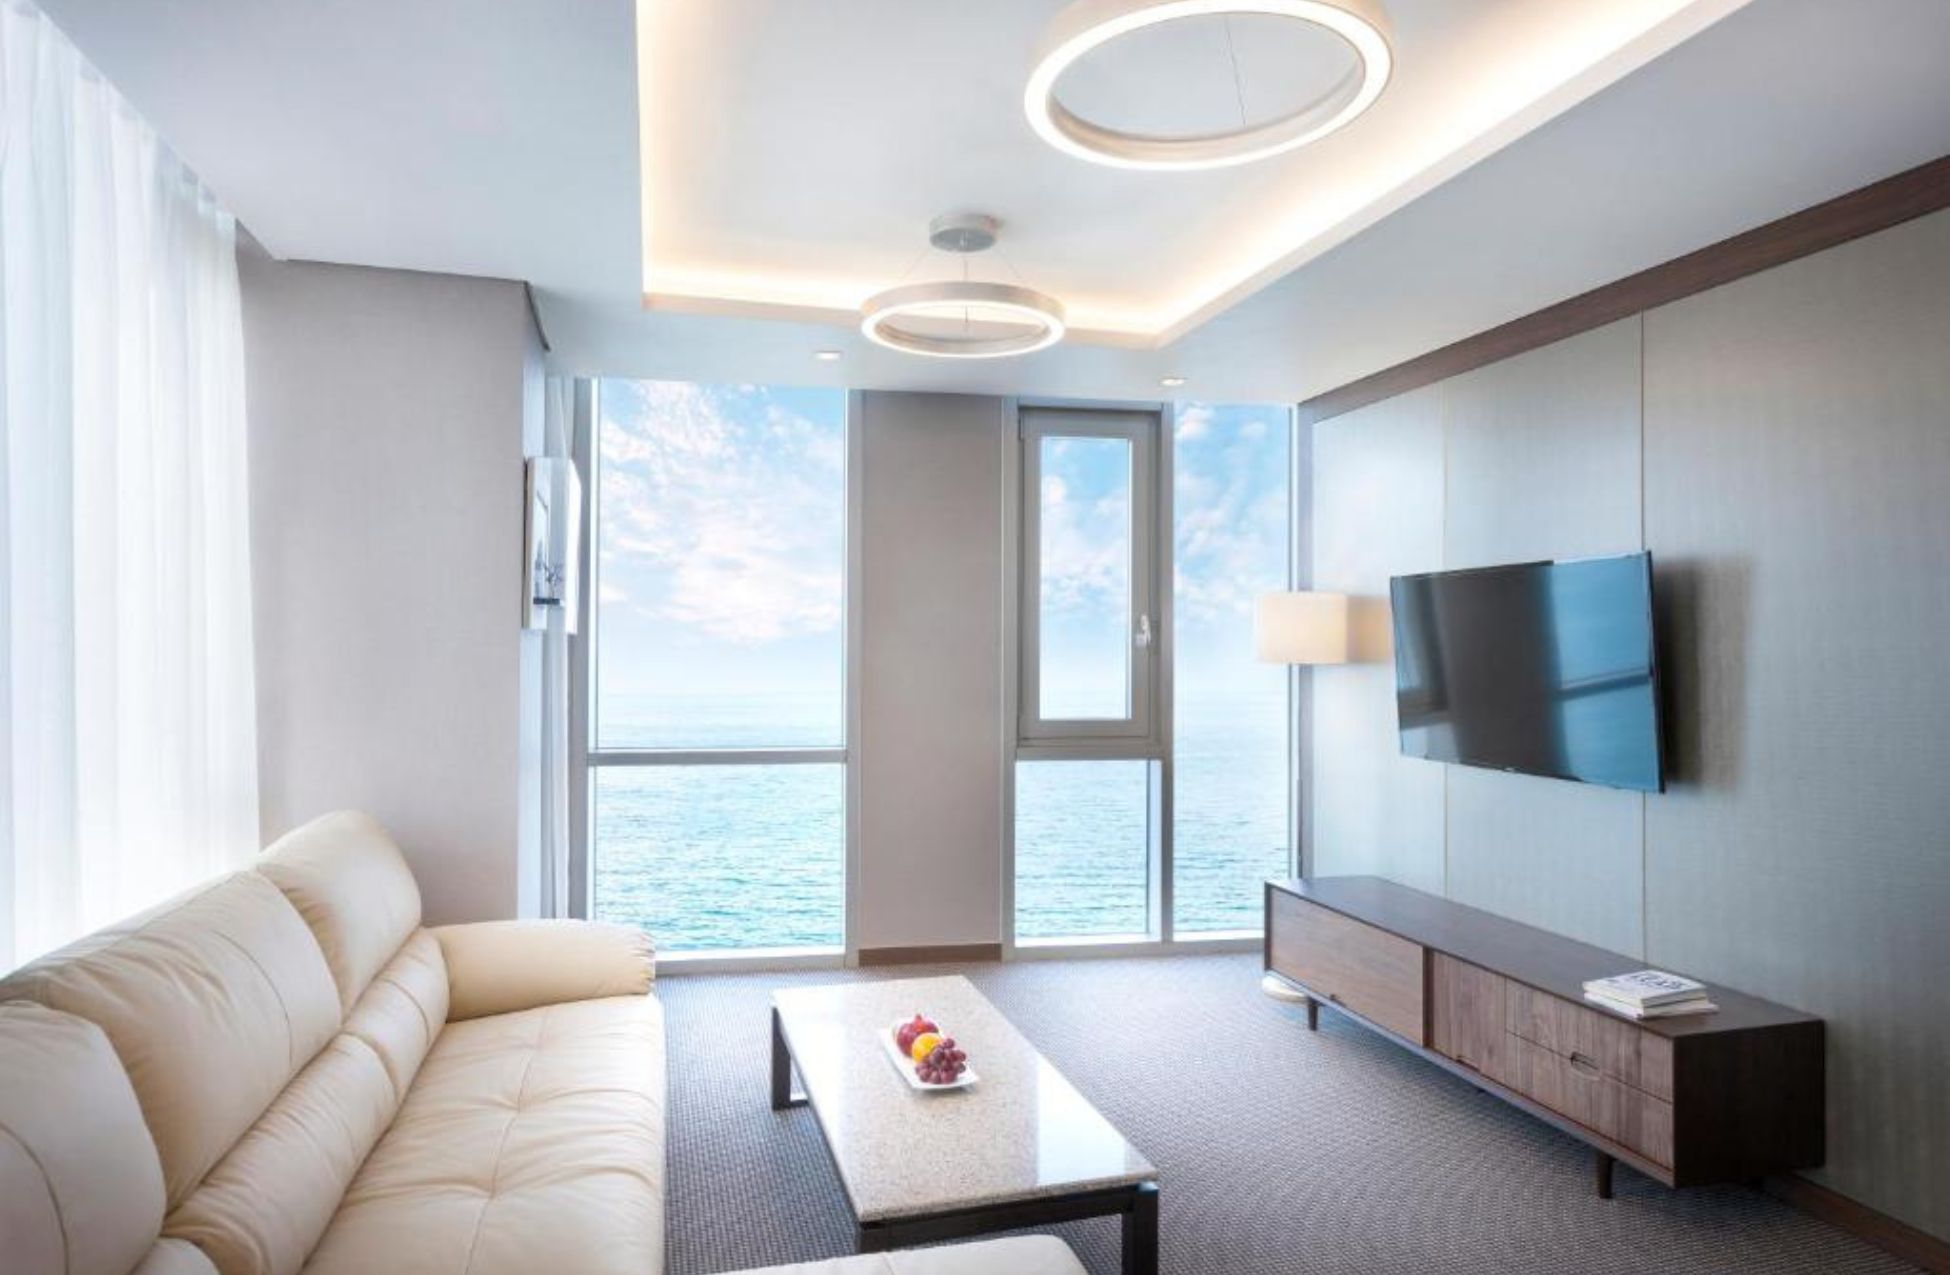 Hotel Regent Marine The Blue - Best Hotels In Jeju Island South Korea